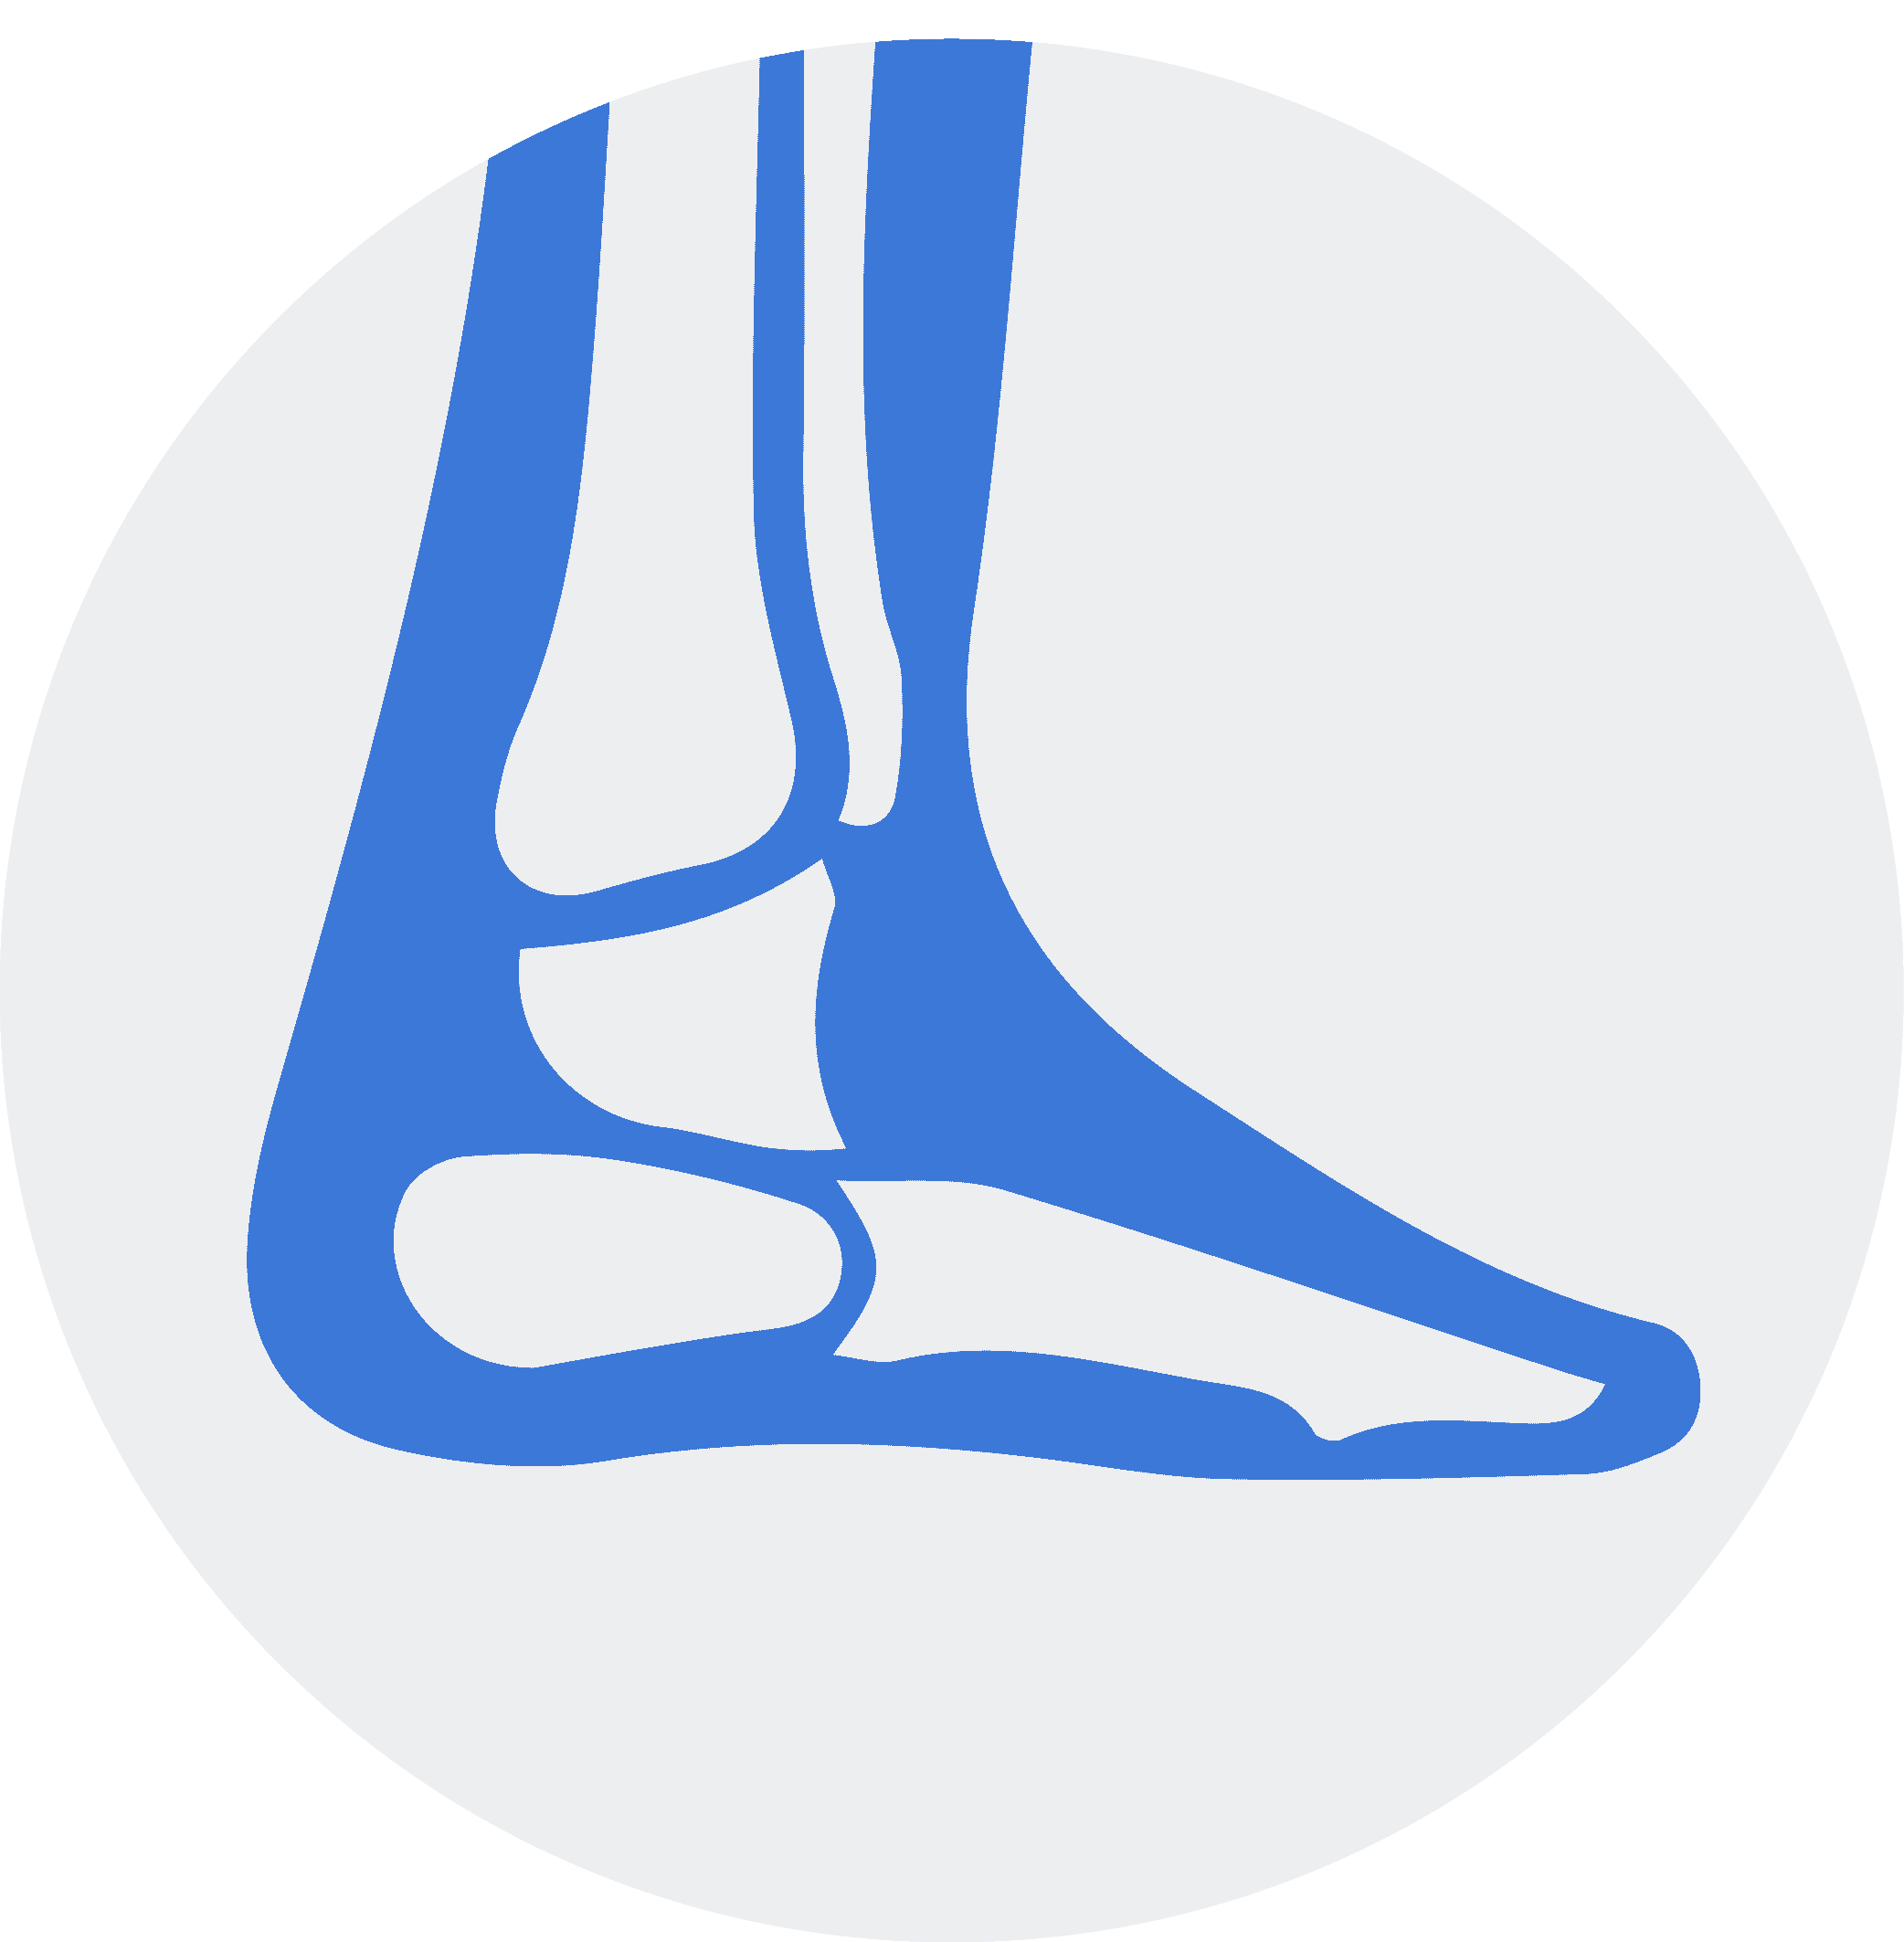 foot icon with bones